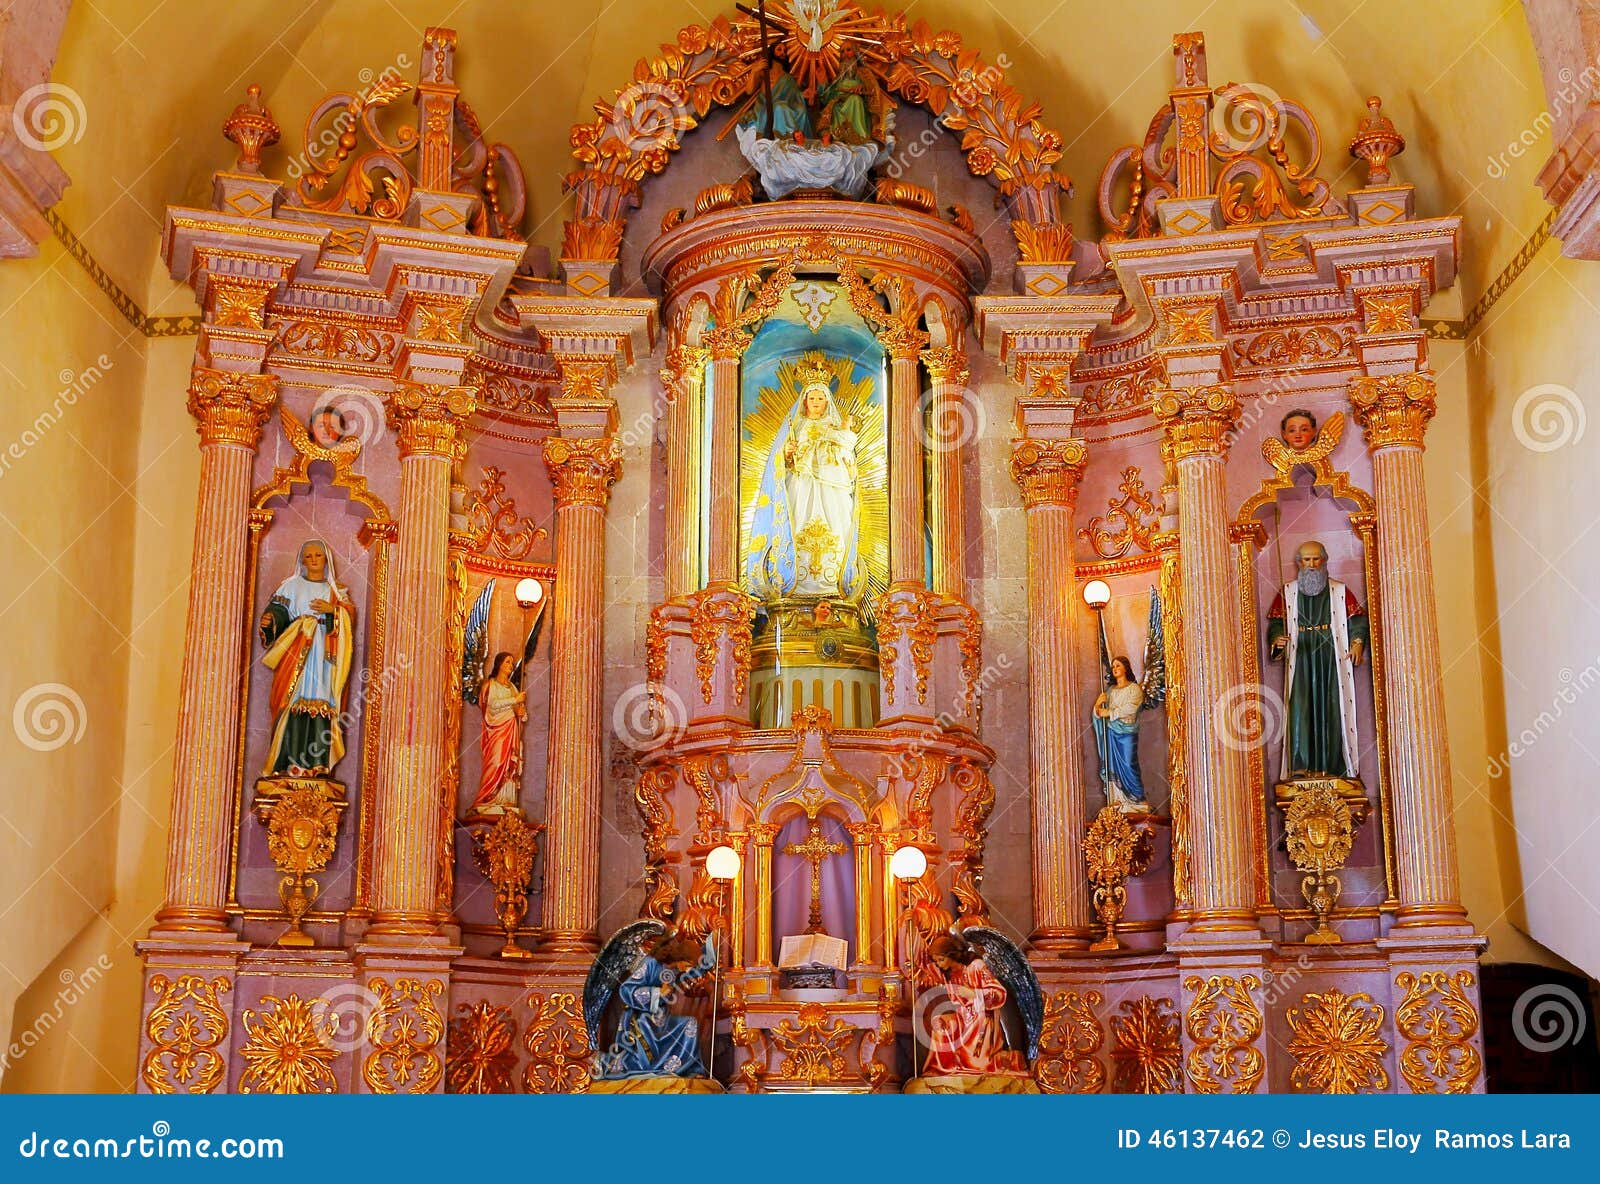 altar of the virgen del patrocinio church, zacatecas city, mexico. v